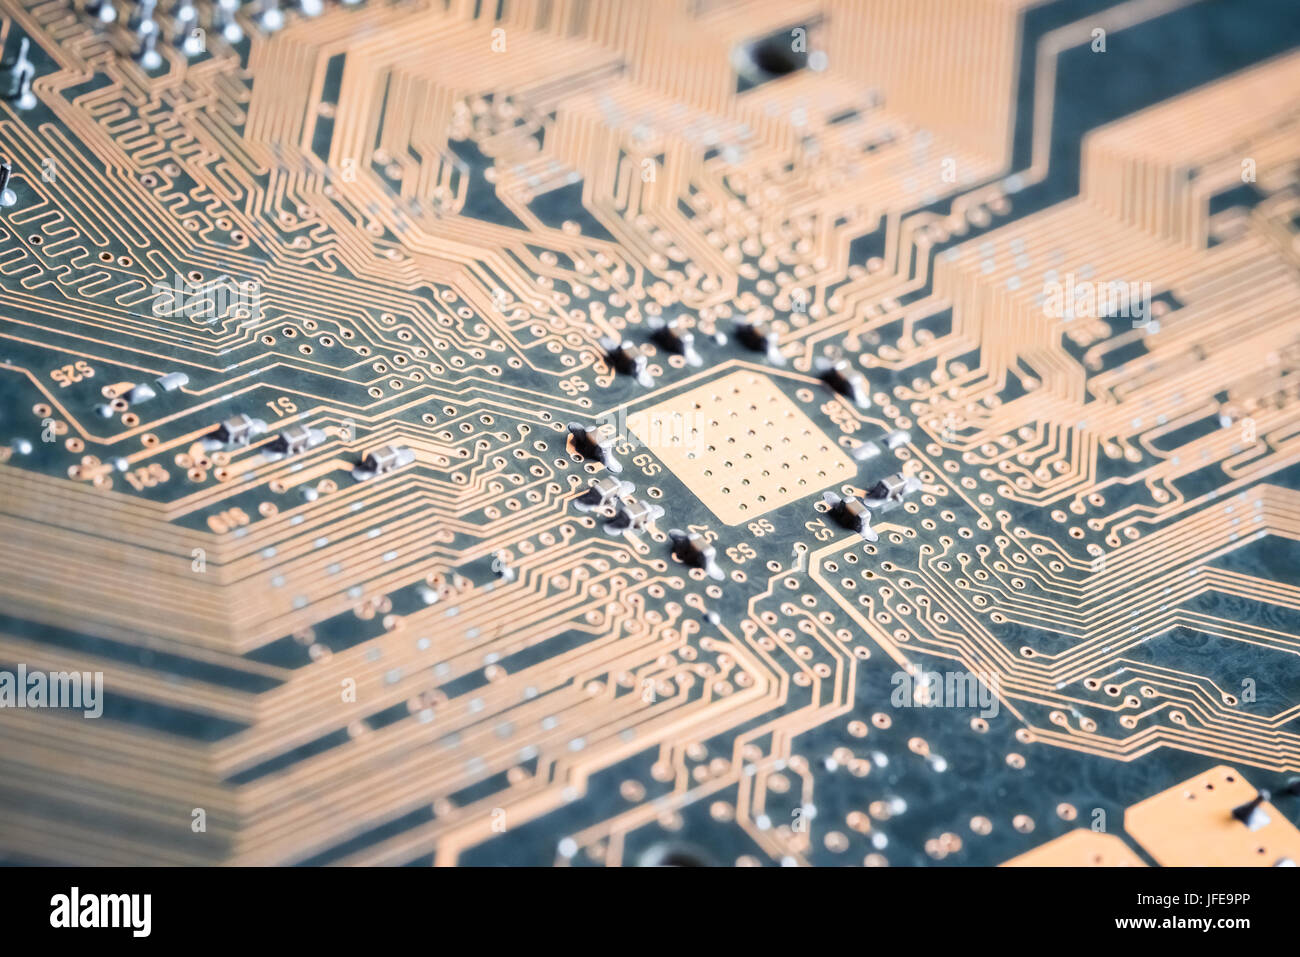 electronic circuit board closeup Stock Photo